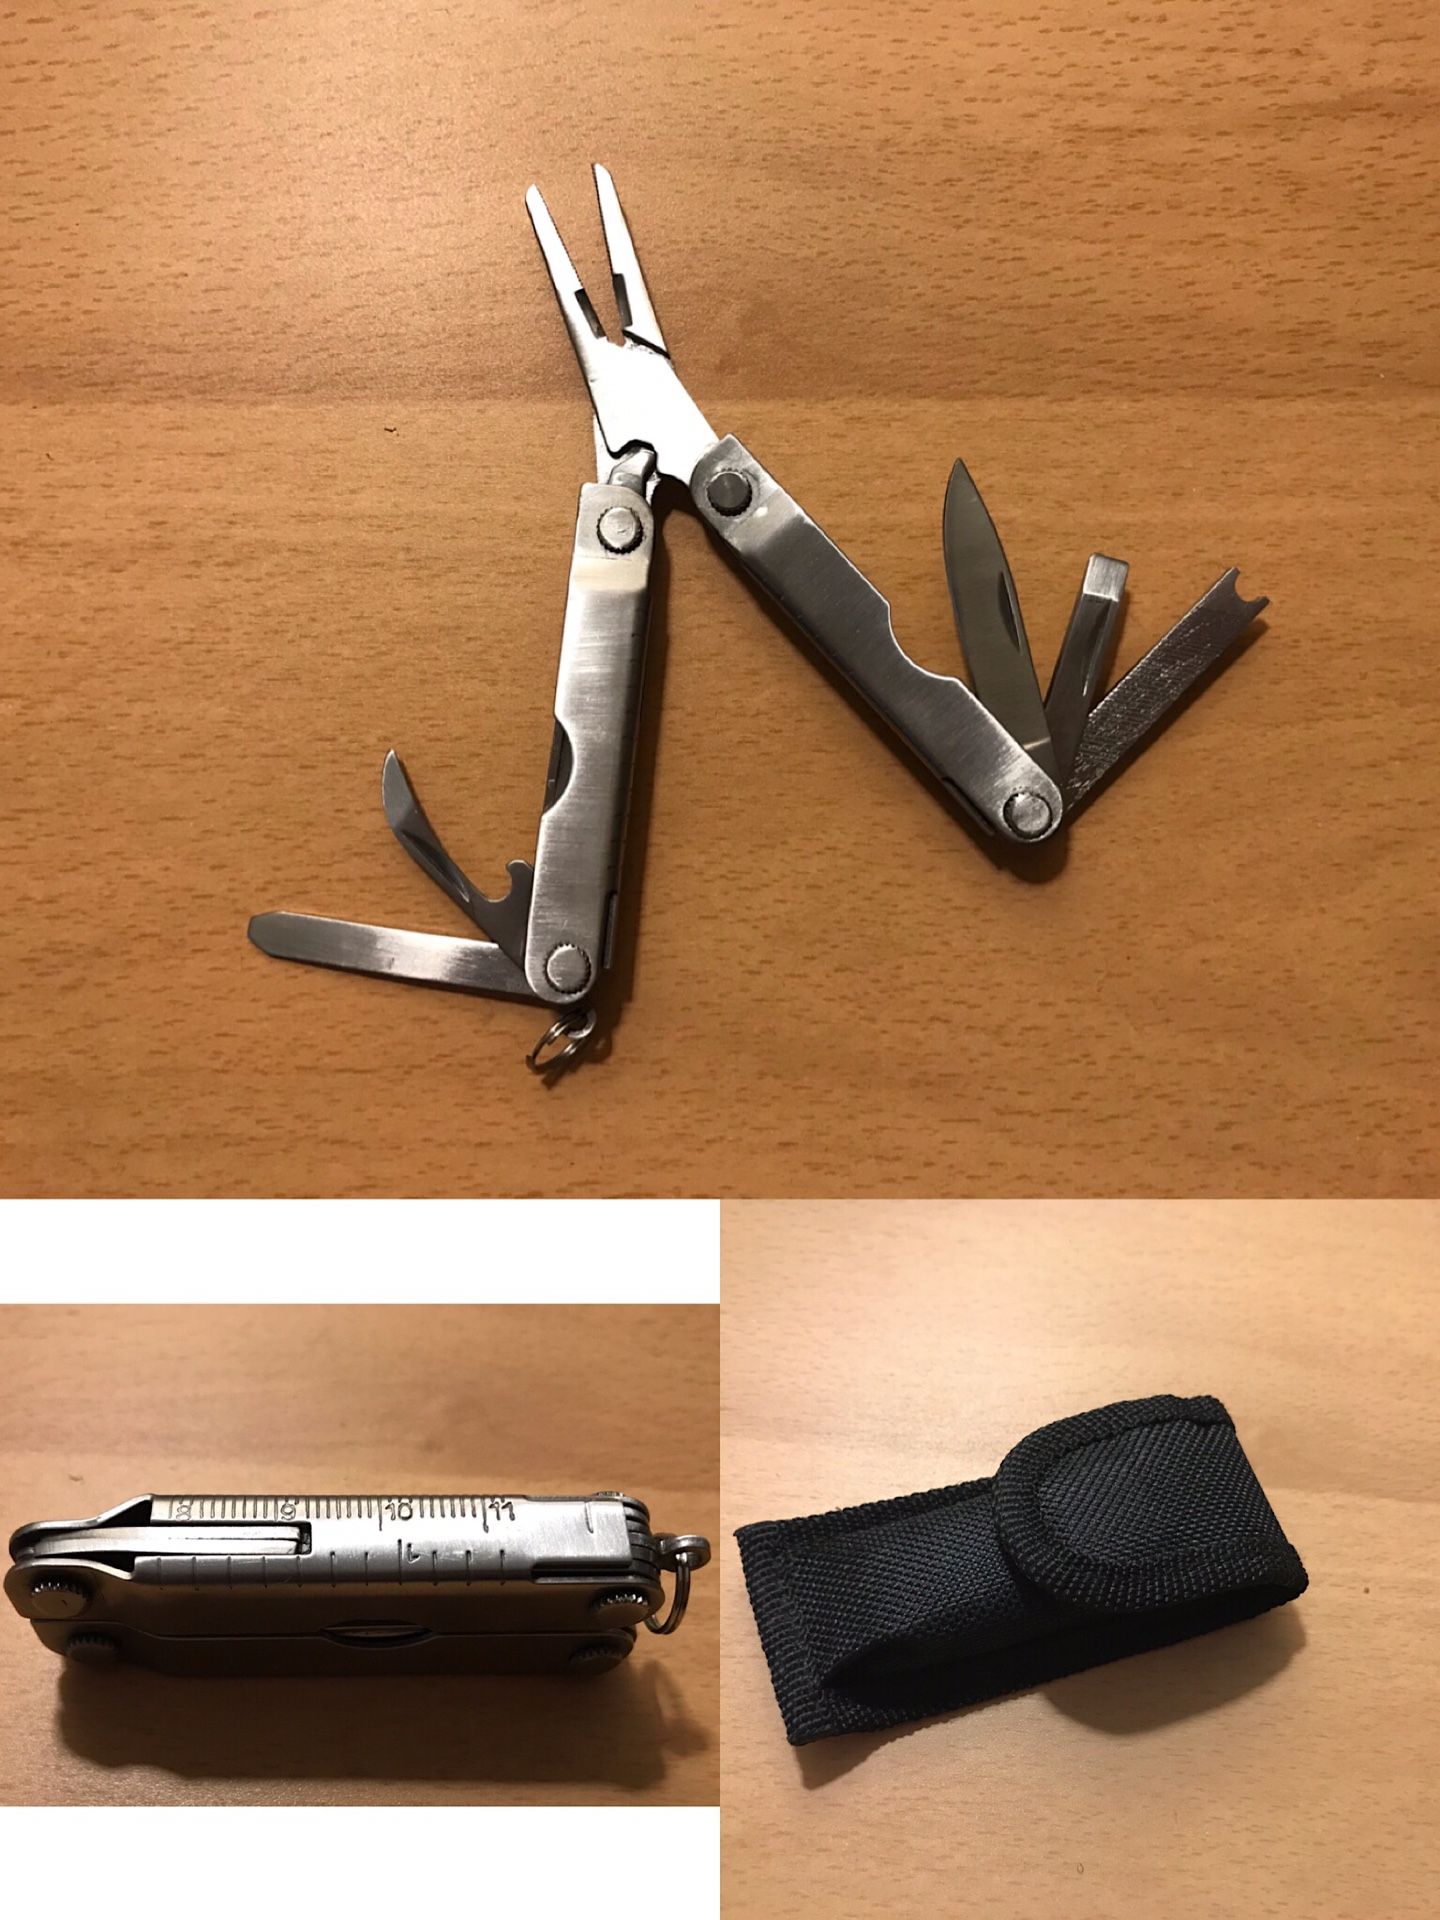 Portable multi-use tool